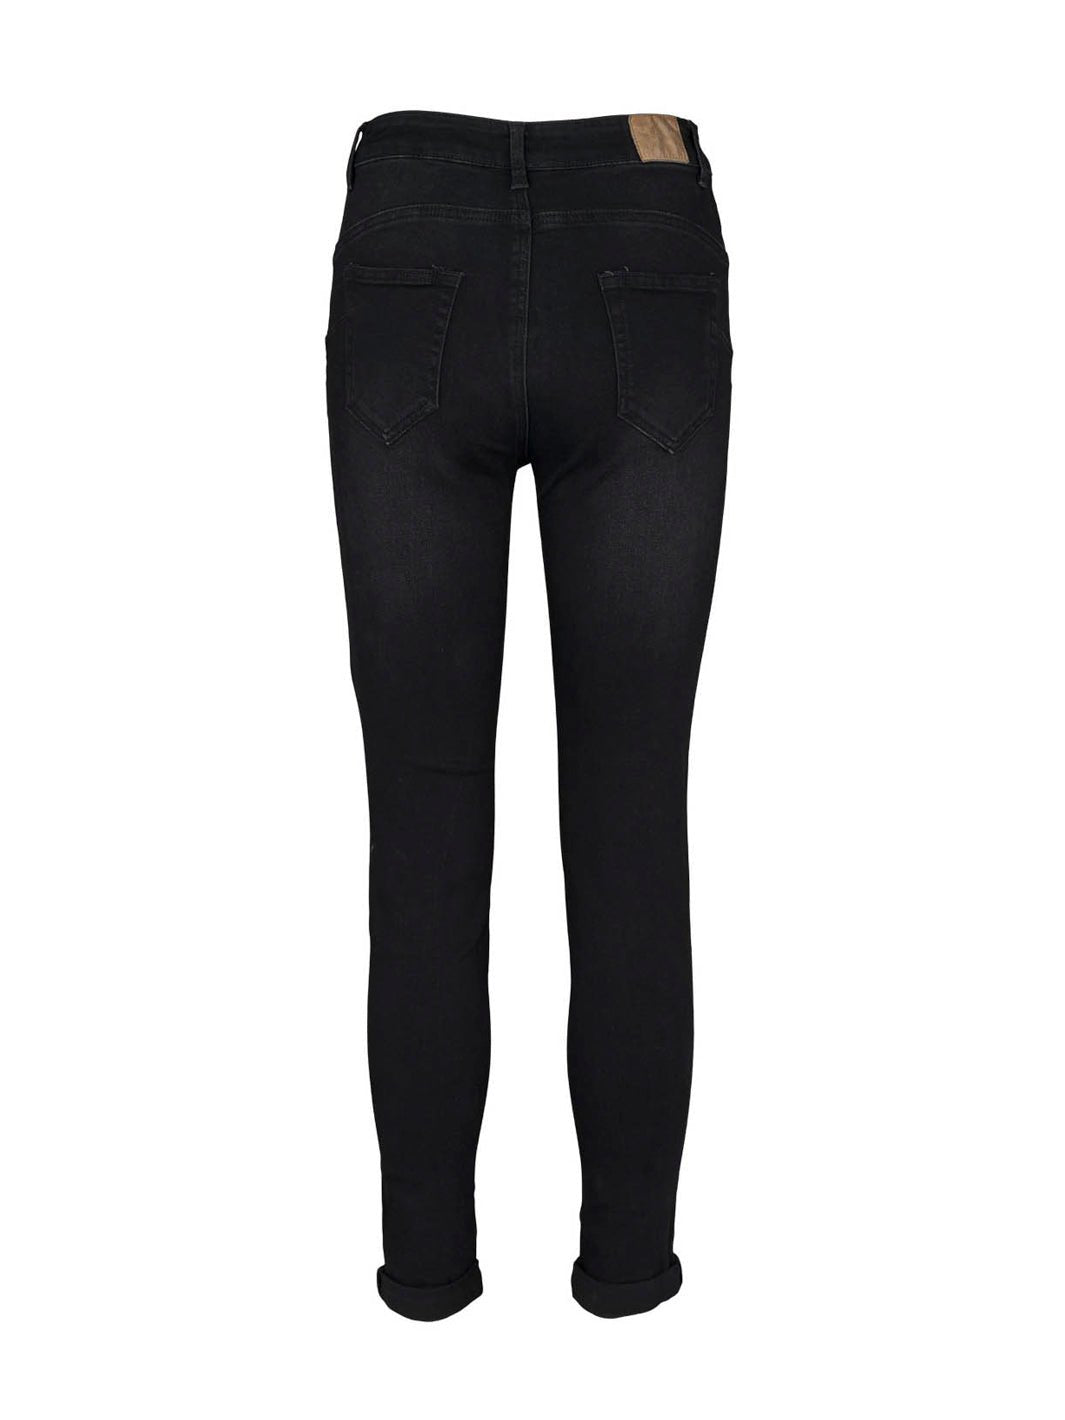 Prepair Amber jeans black - Online-Mode